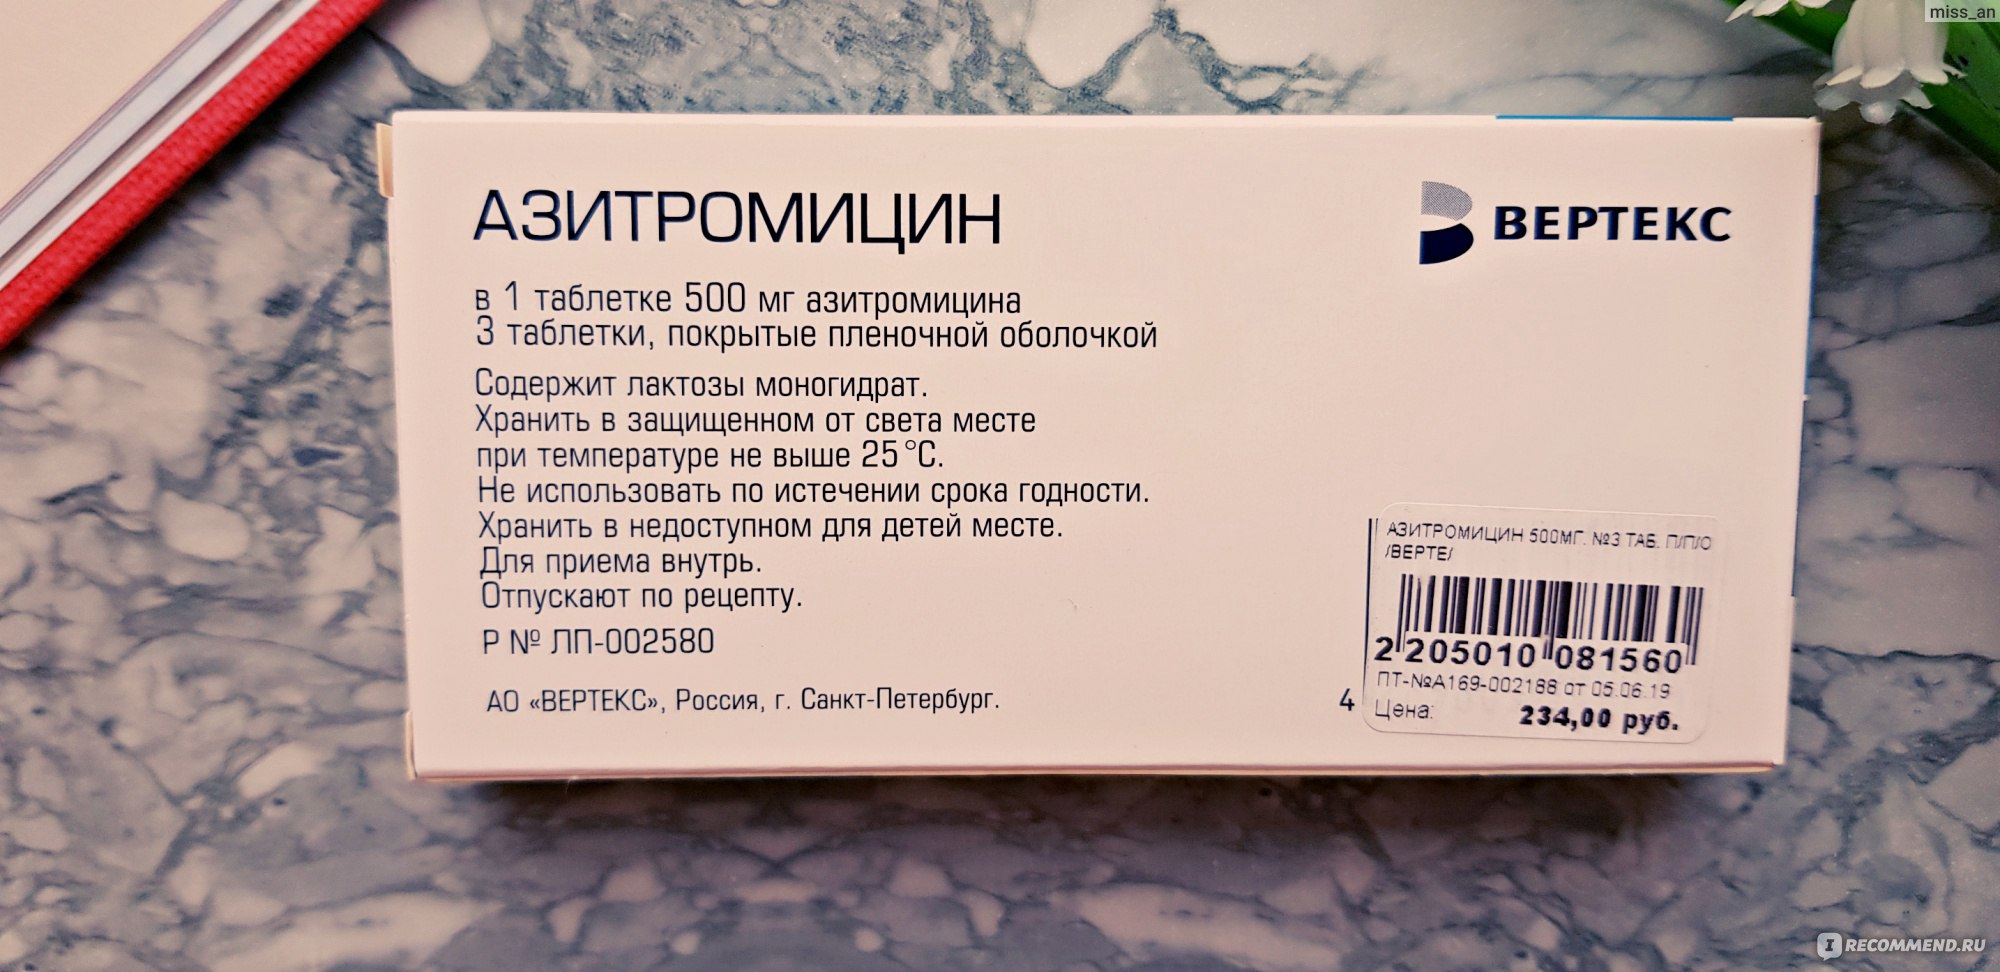 Азитромицин 500 мг рецепт фото